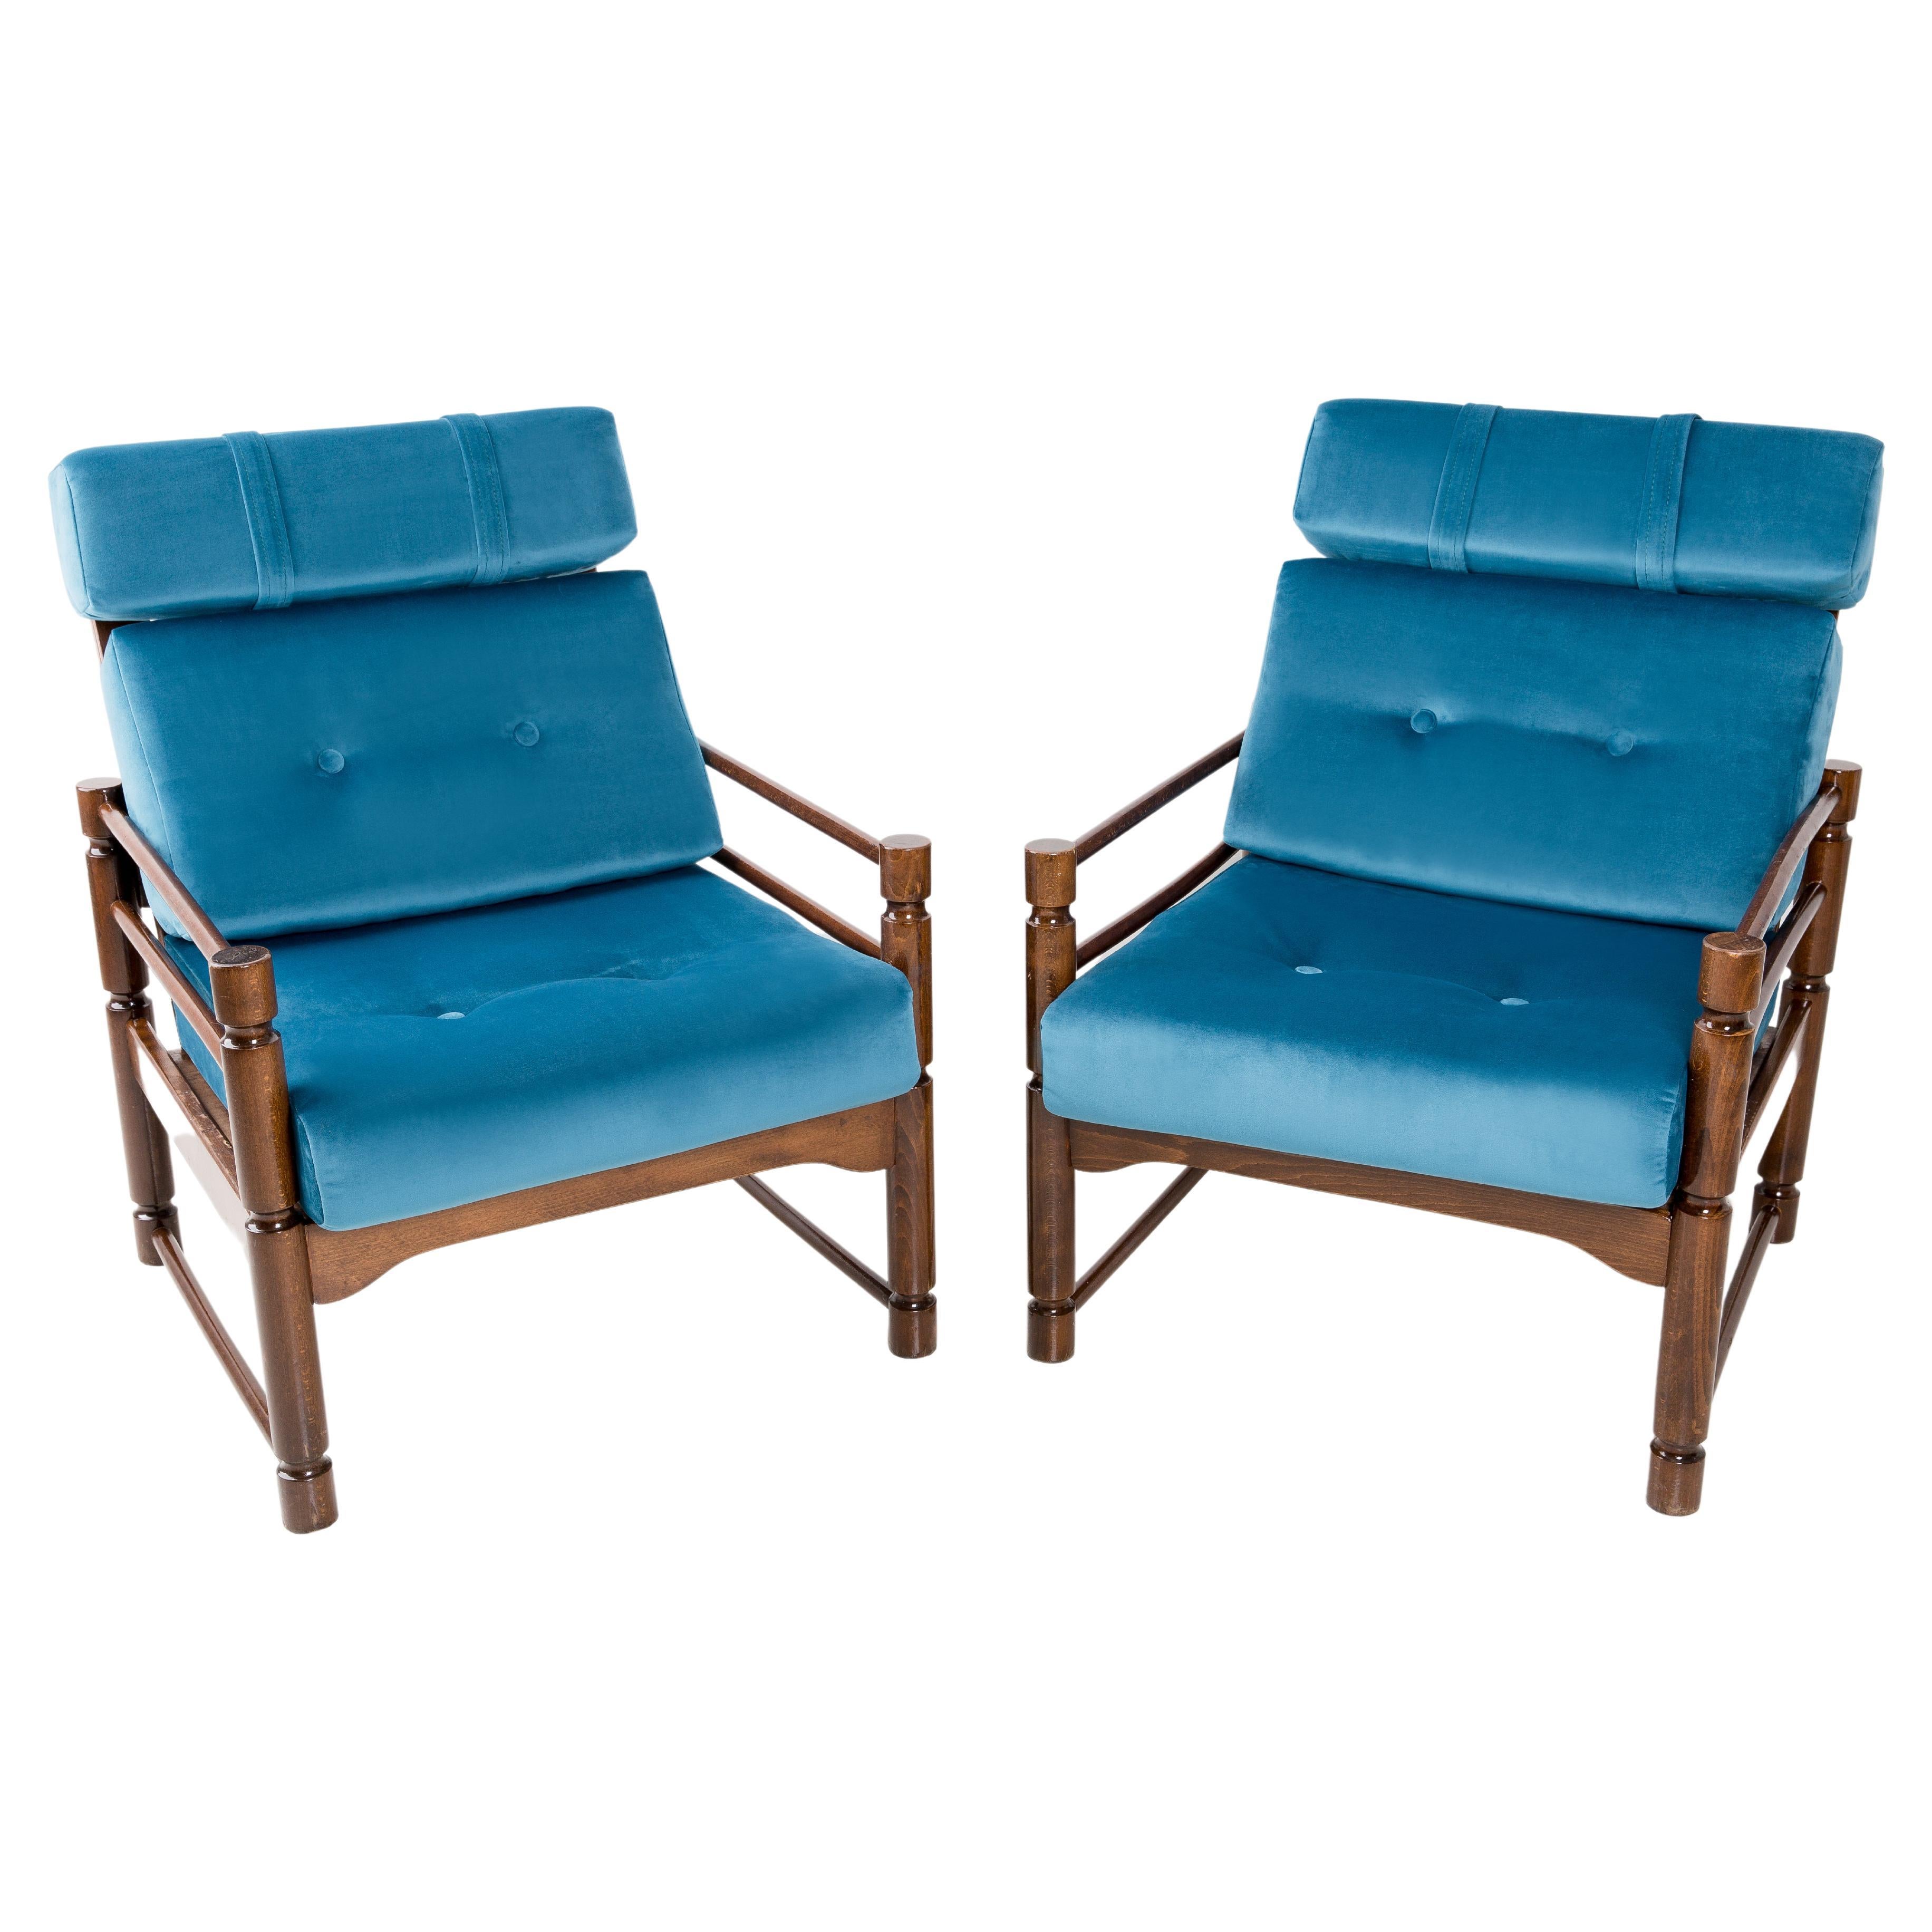 Pair of Mid Century Petrol Blue Velvet Armchairs, Beech Wood, Europe, 1960s For Sale